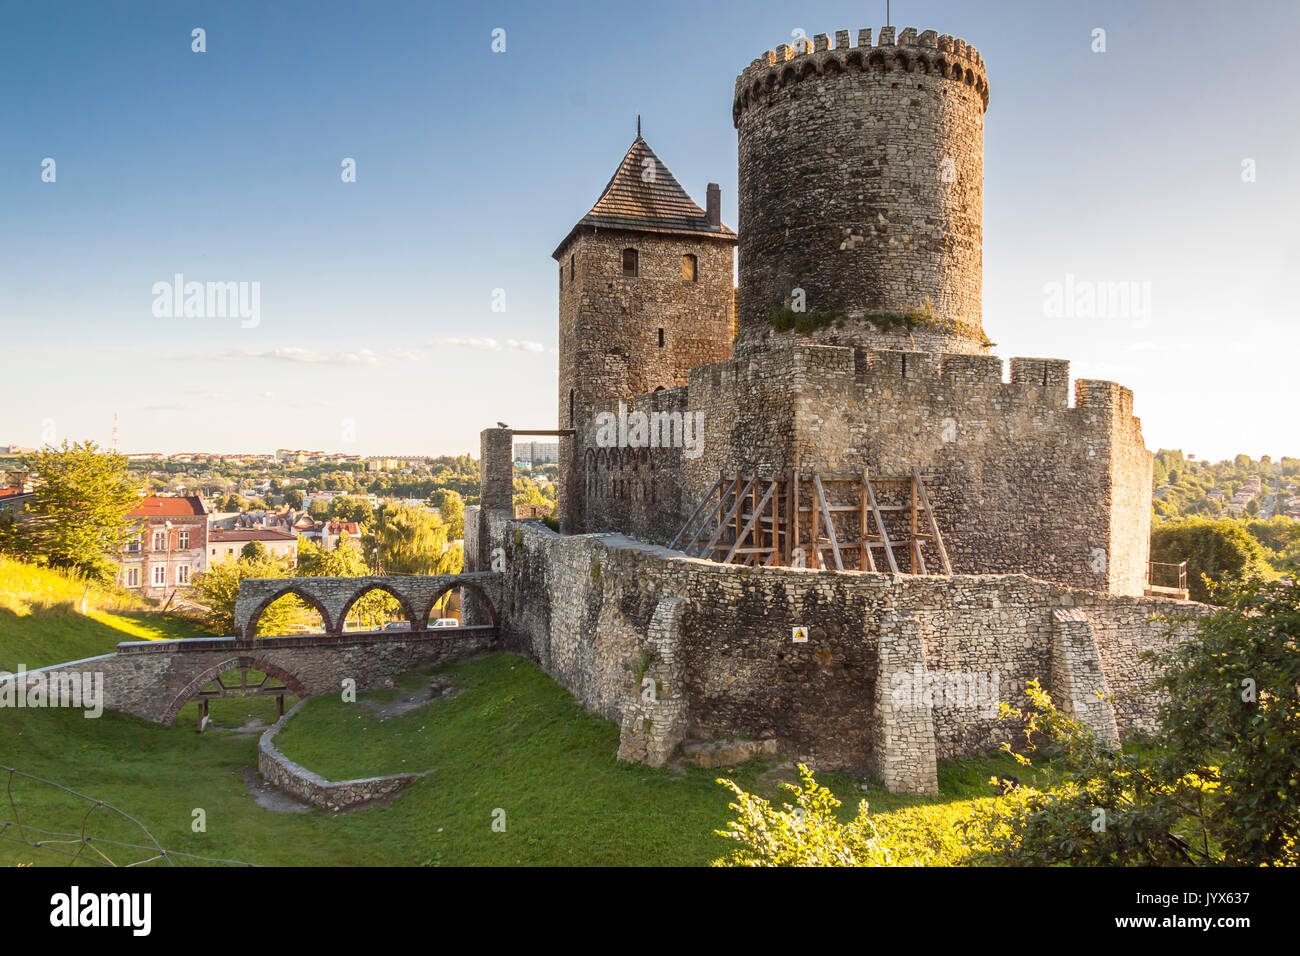 Medieval castle - Bedzin, Poland Stock Photo